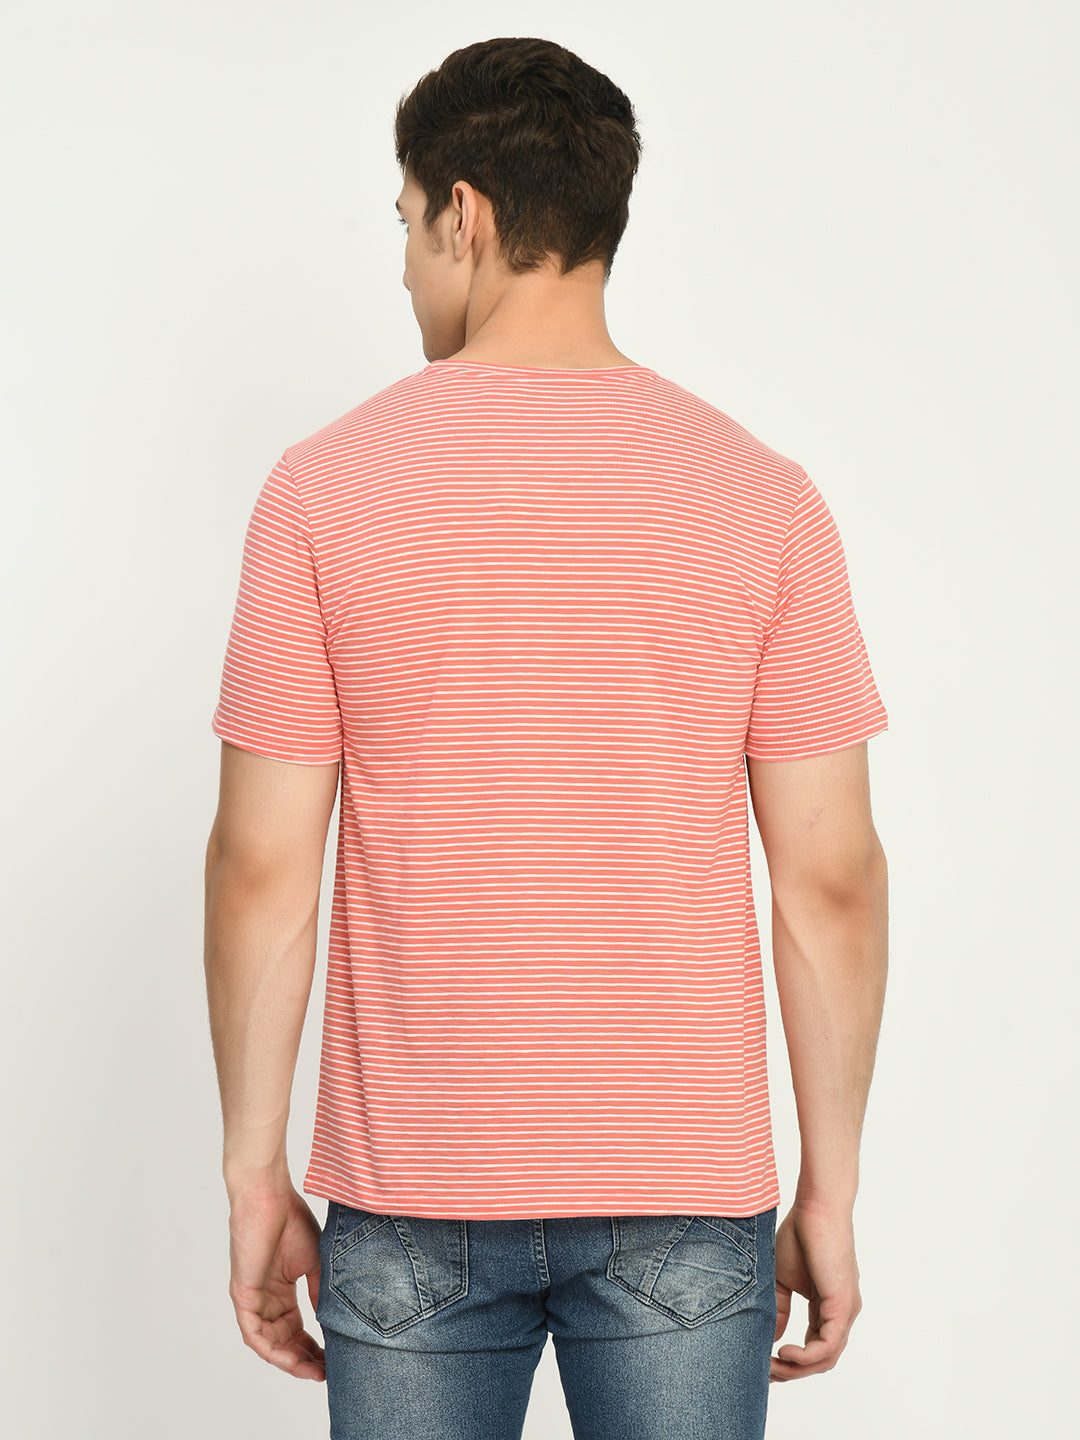 Men's Peach White Striped Knitted T-Shirt